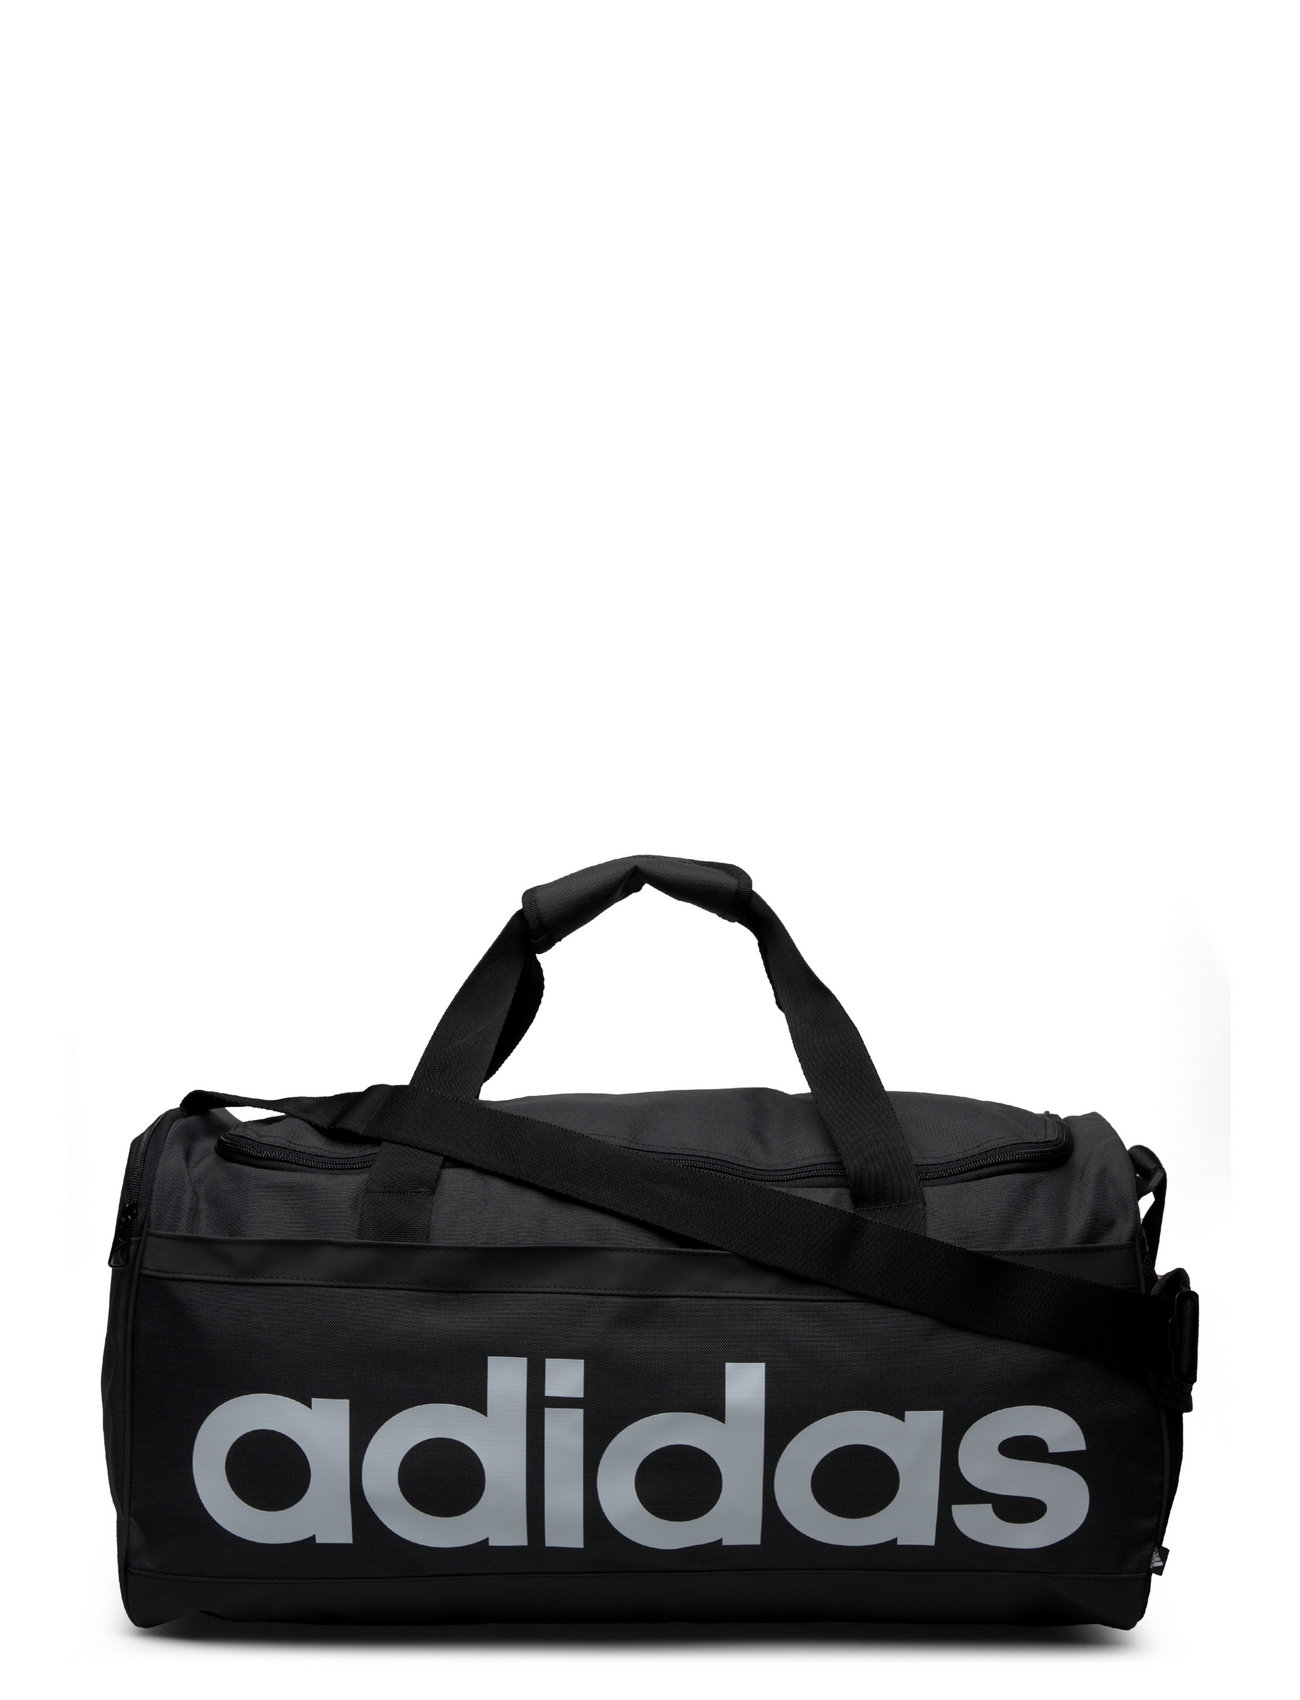 Sac De Sport Adidas Linear M Noir et Blanc ADIDAS - Cdiscount Sport